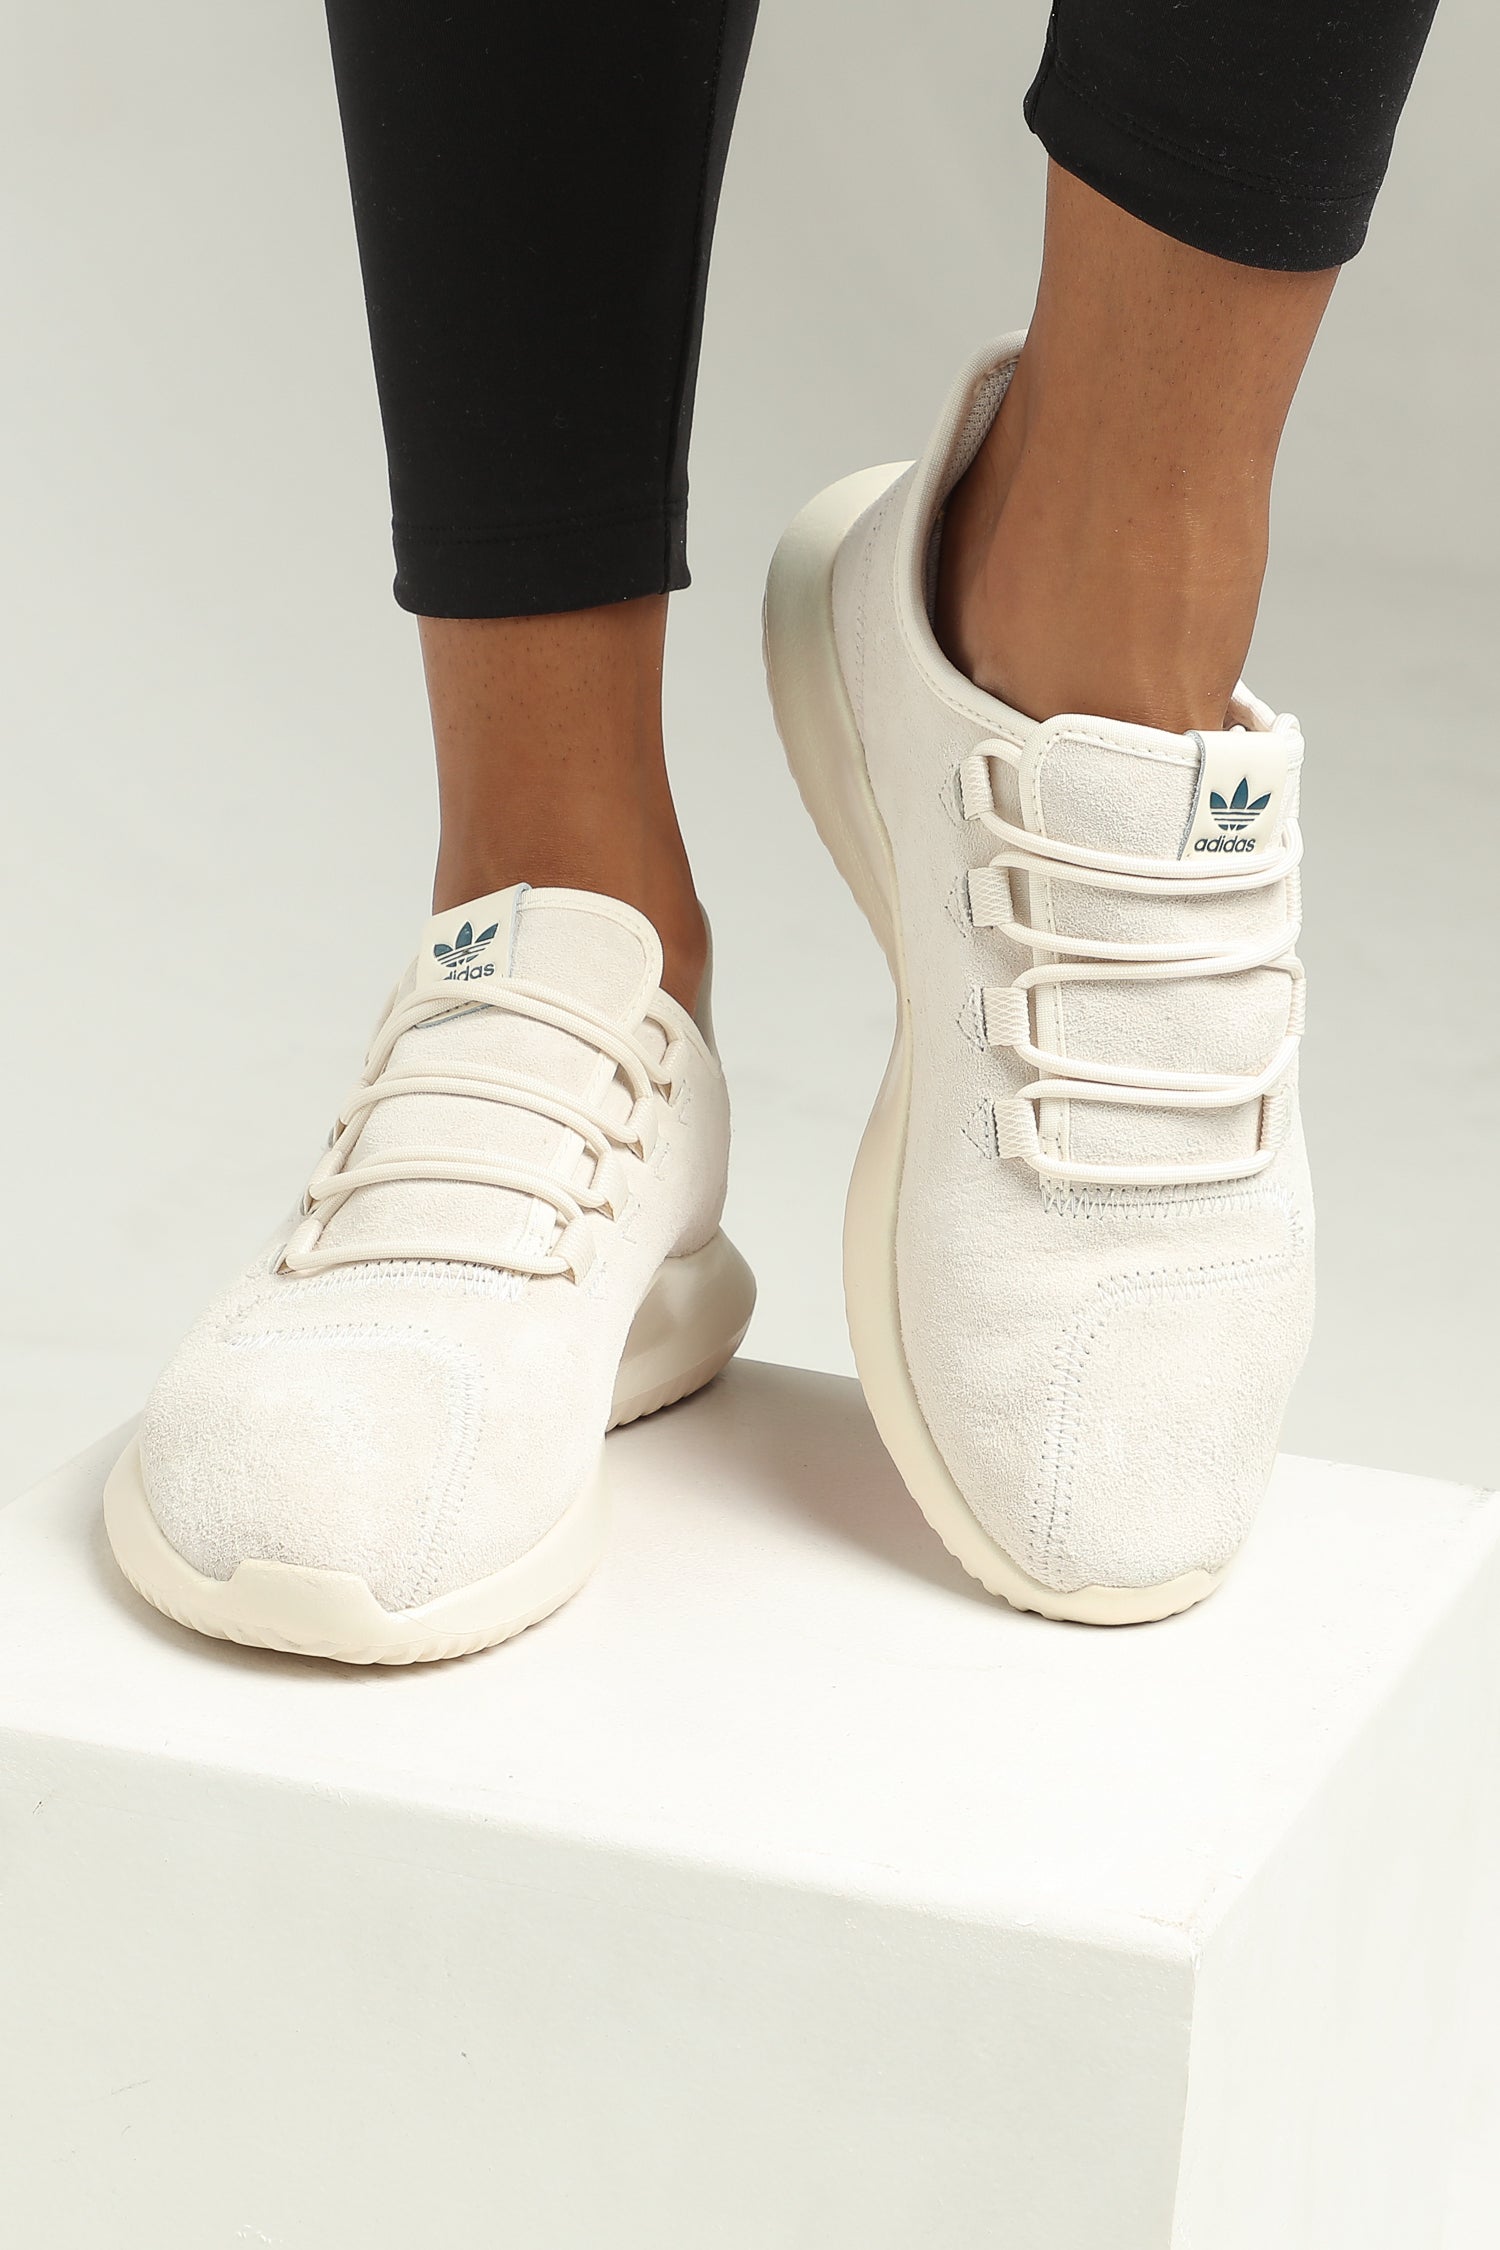 adidas women's tubular shadow sneakers